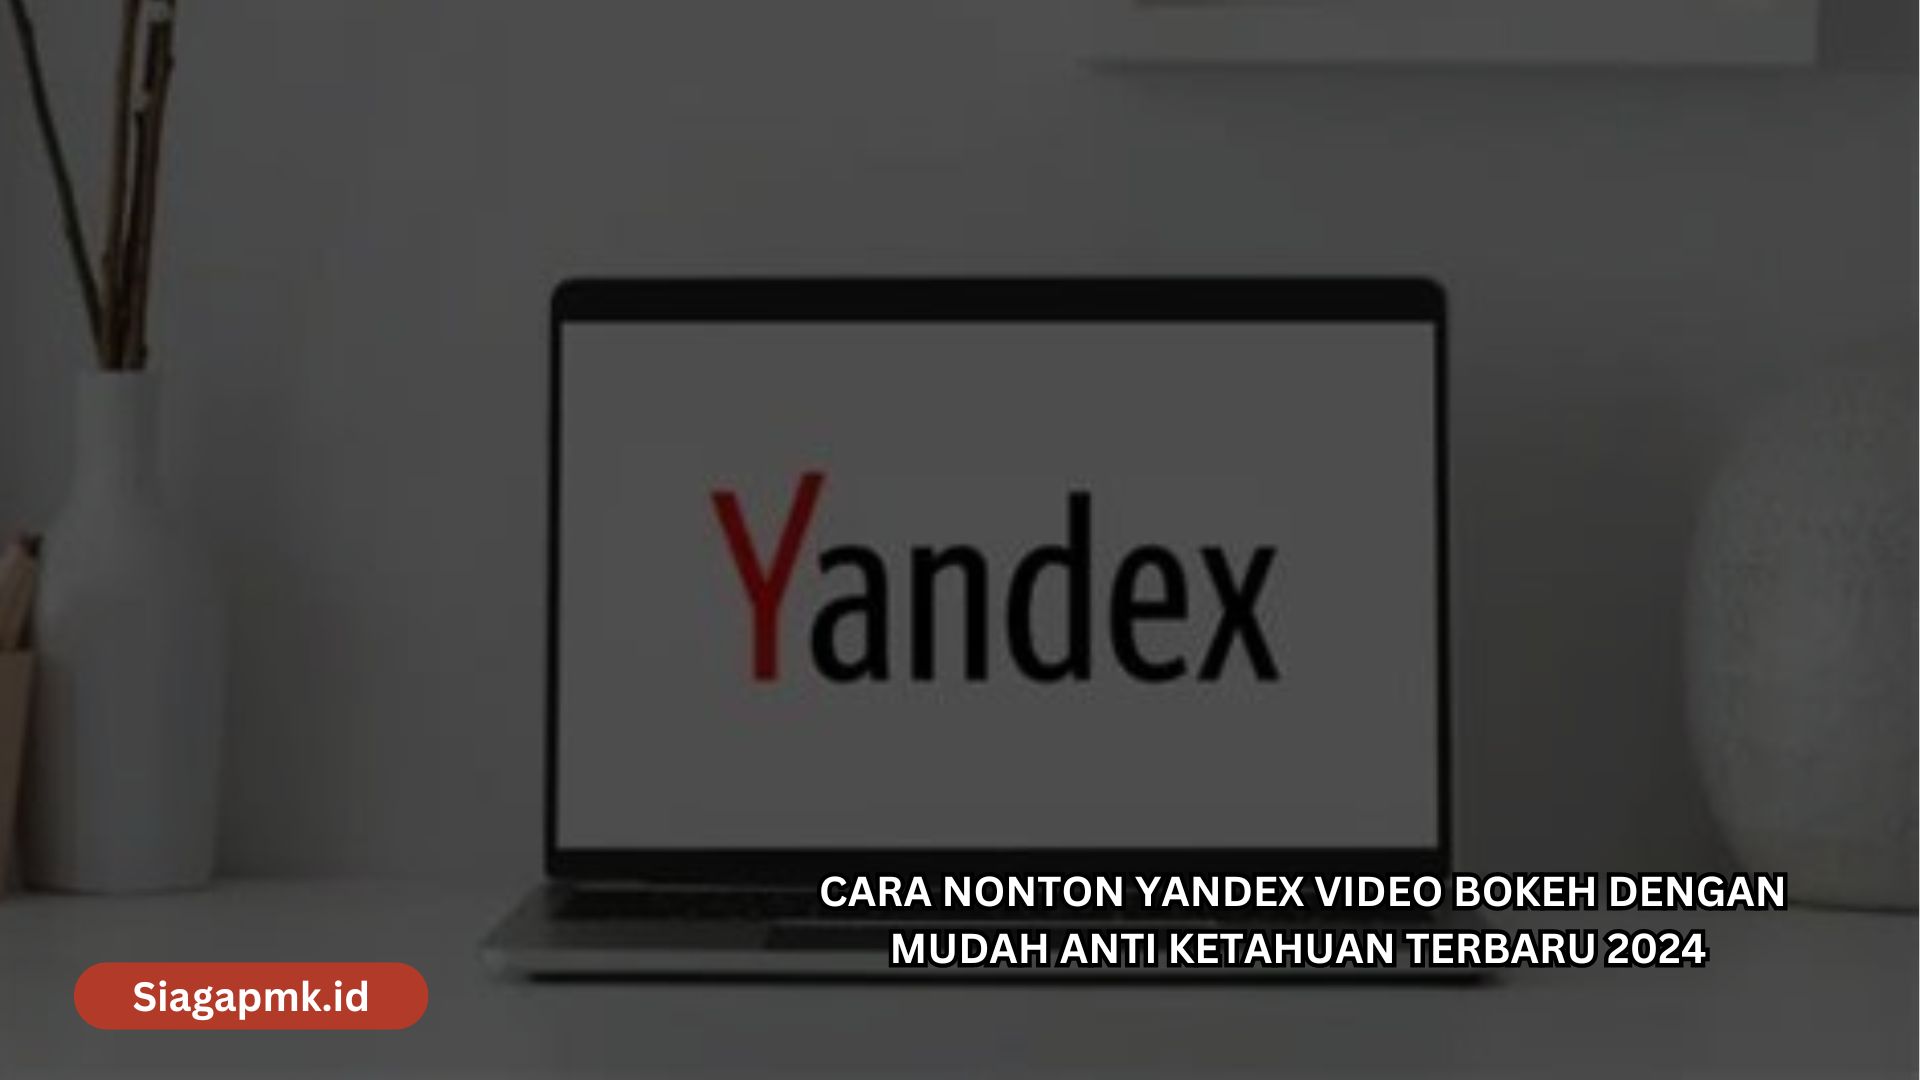  Cara Nonton Yandex Video Bokeh dengan Mudah Anti Ketahuan Terbaru 2024